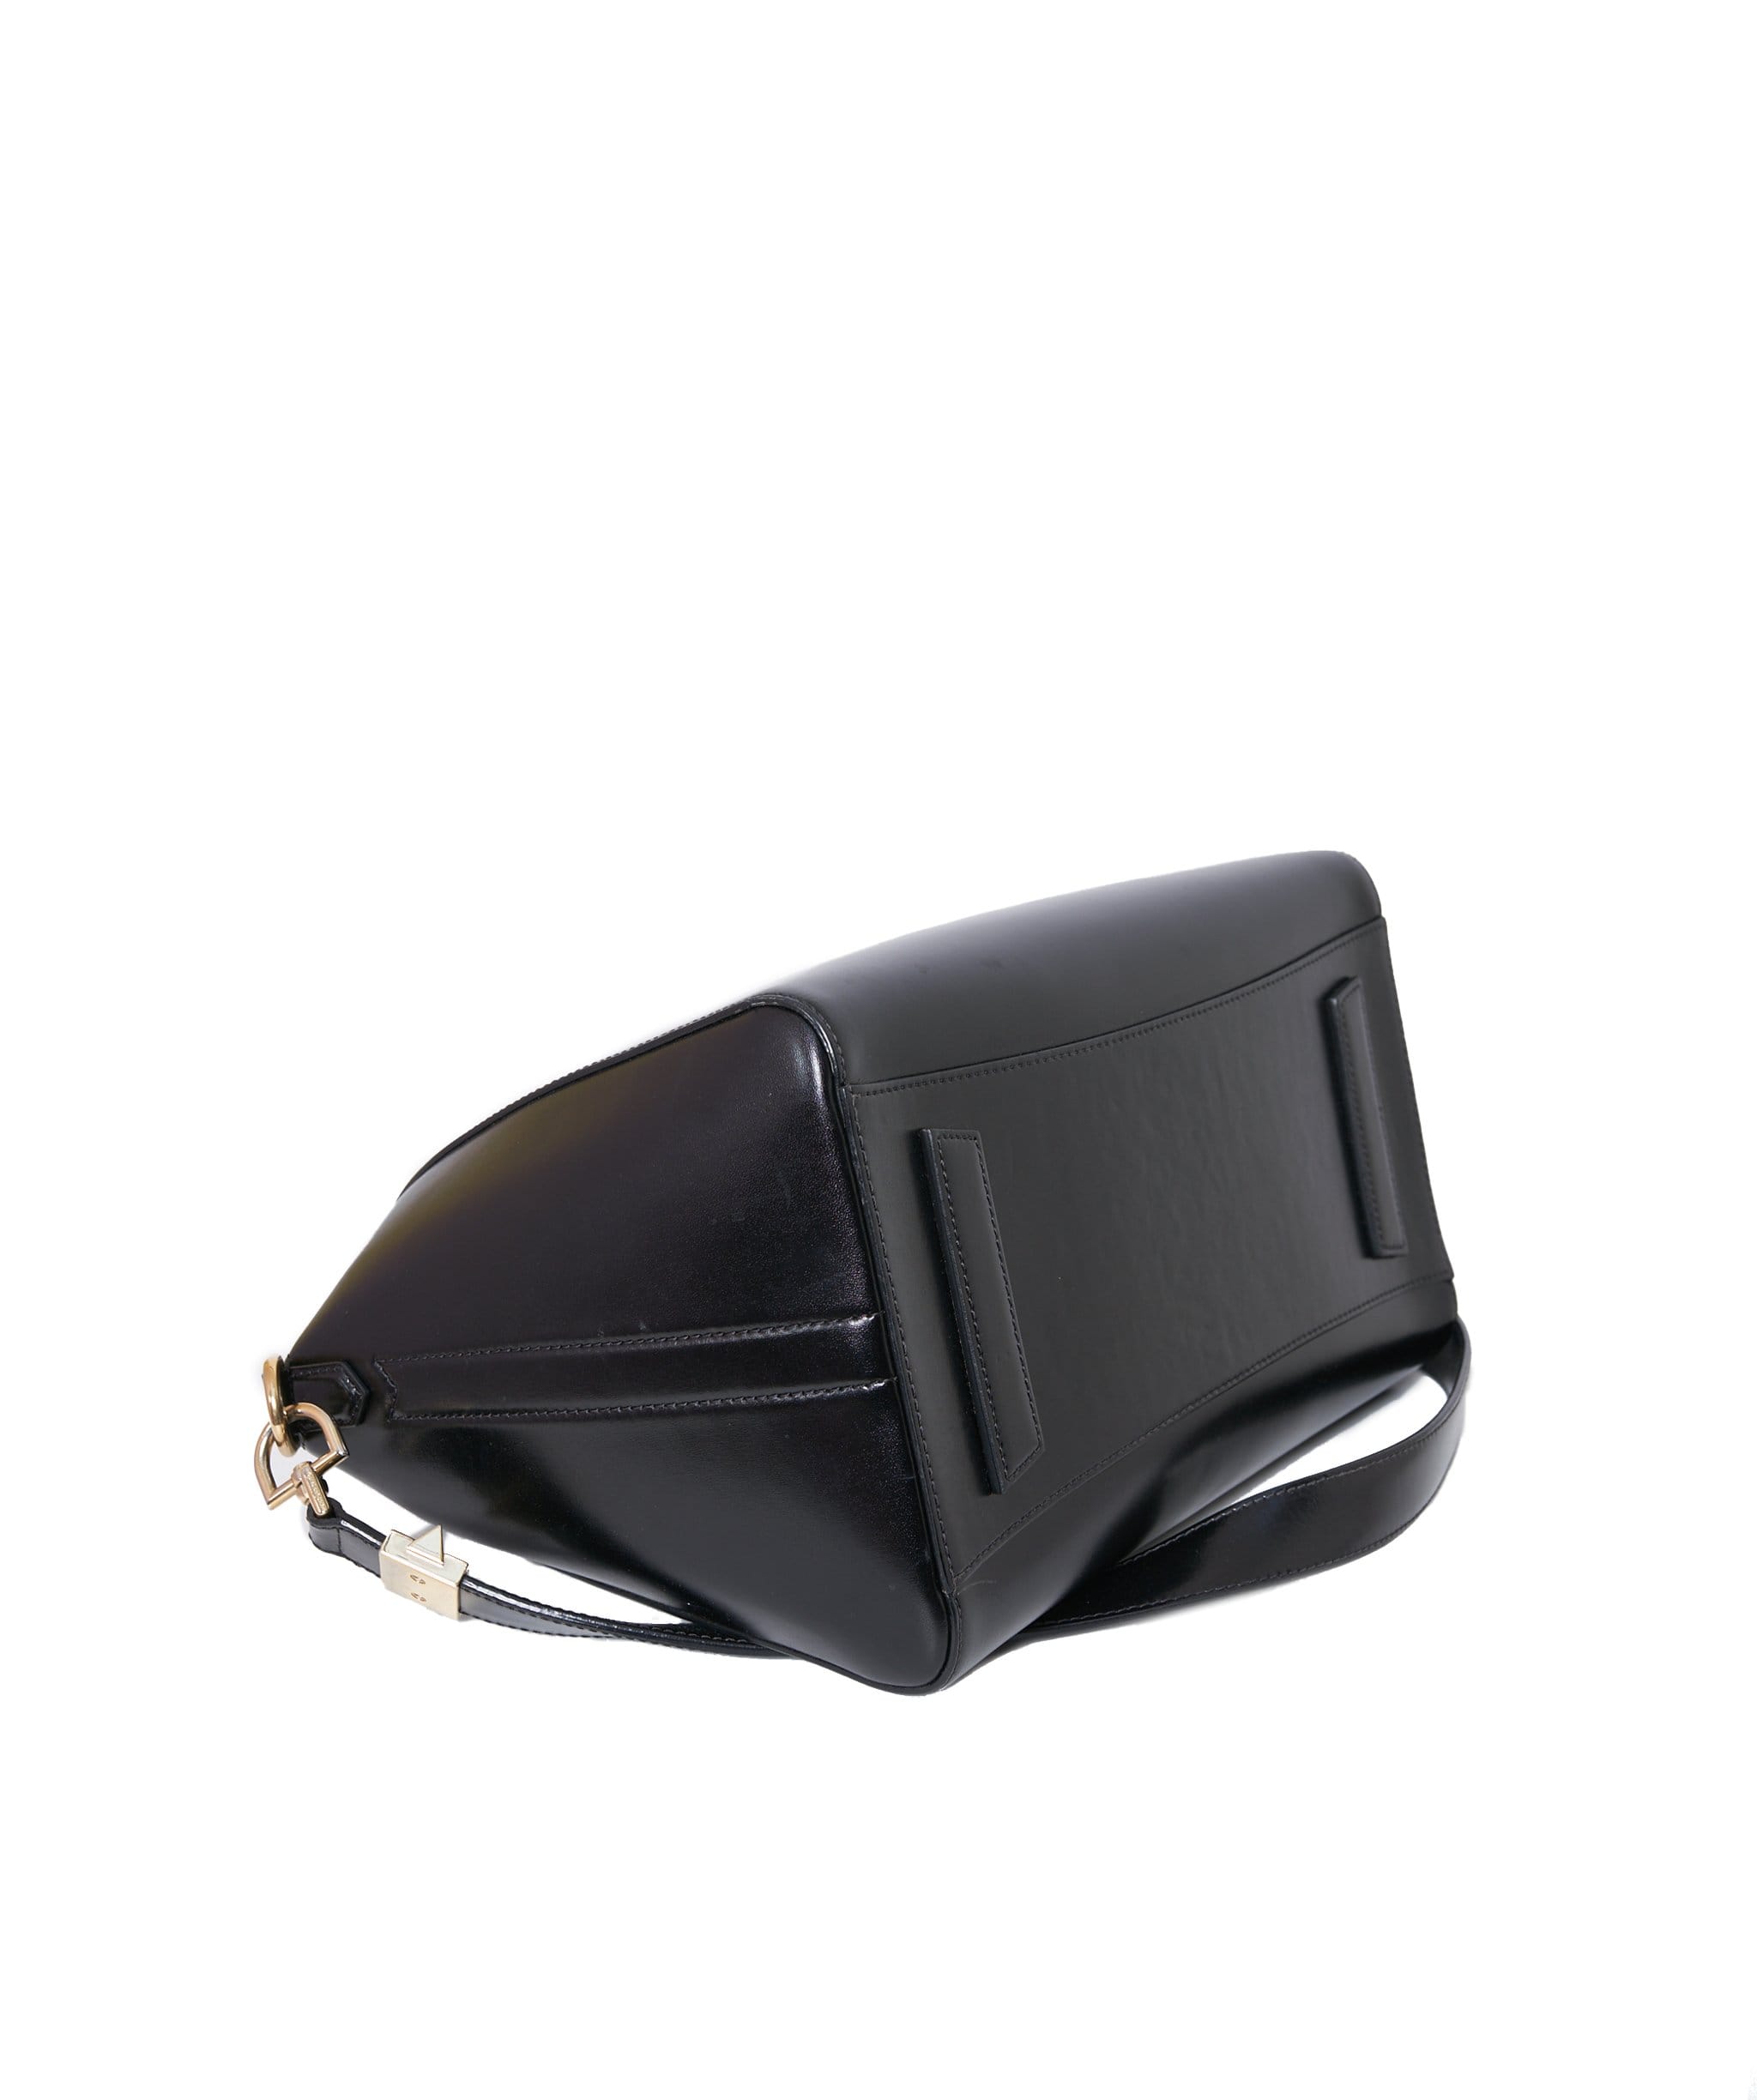 Givenchy Black leather Givenchy Antigona with PHW - ASL1332